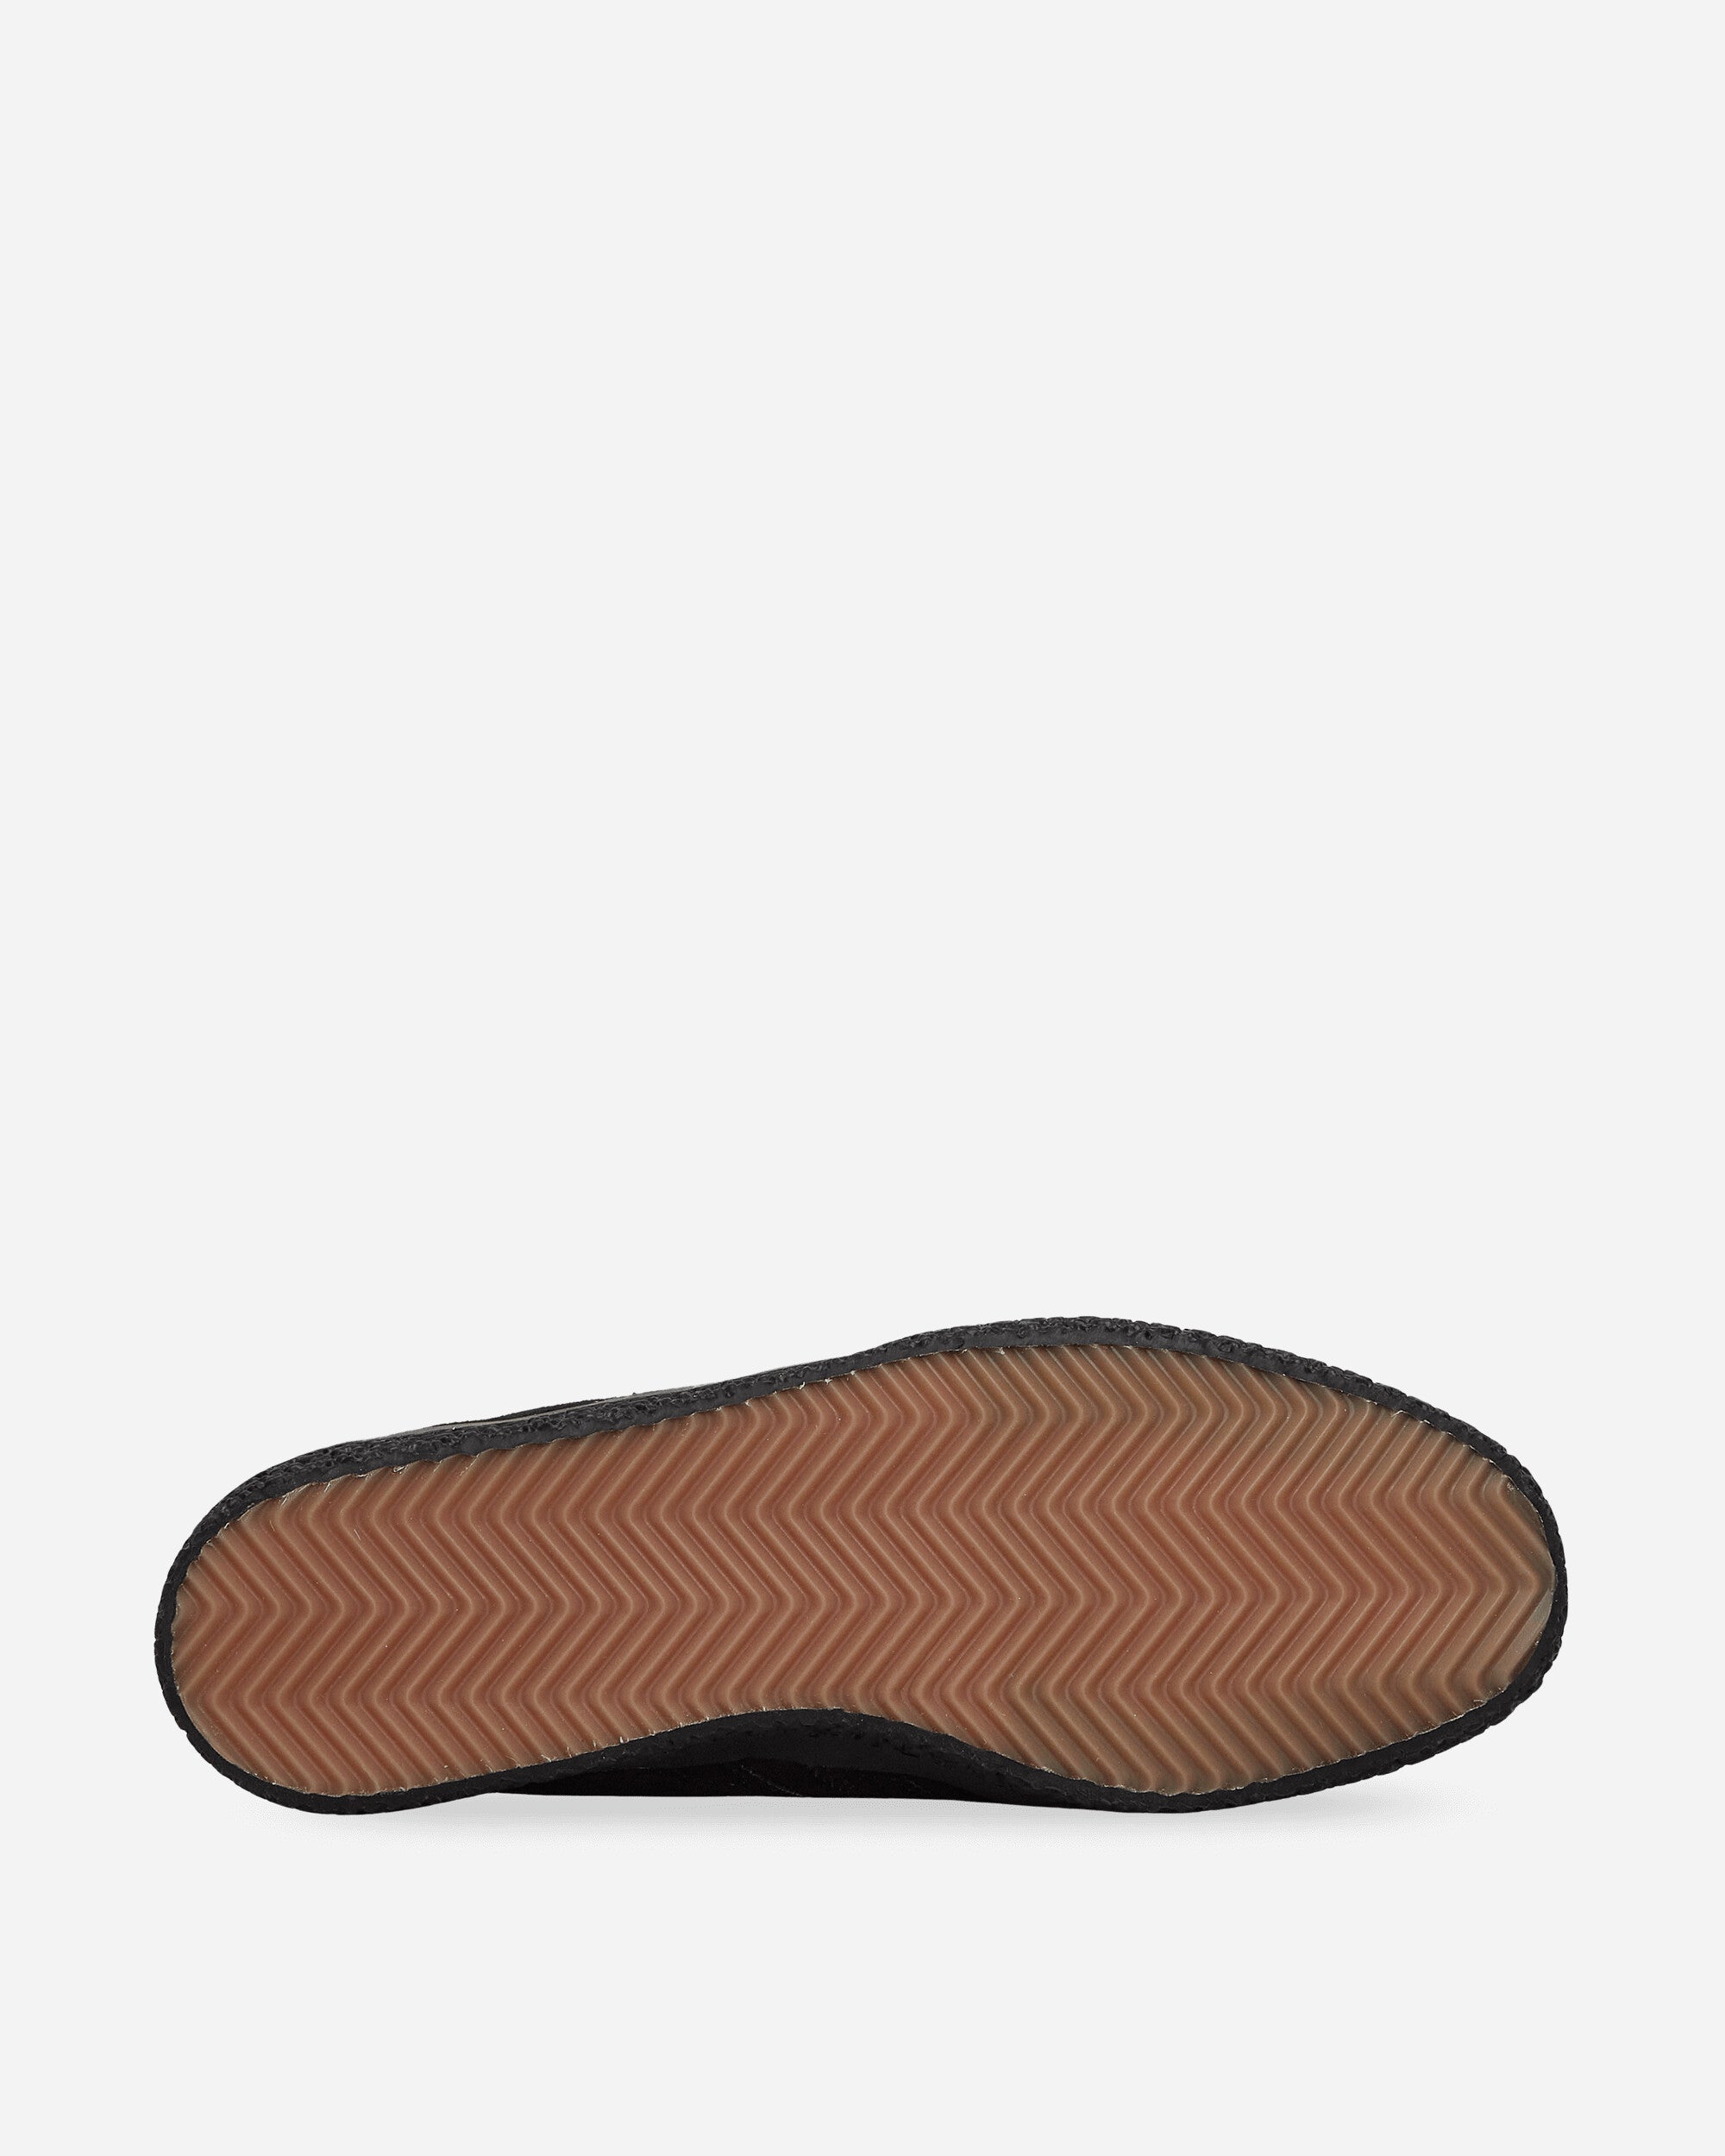 adidas Gazelle Spzl Core Black/Core Black Sneakers Low IG8939 001